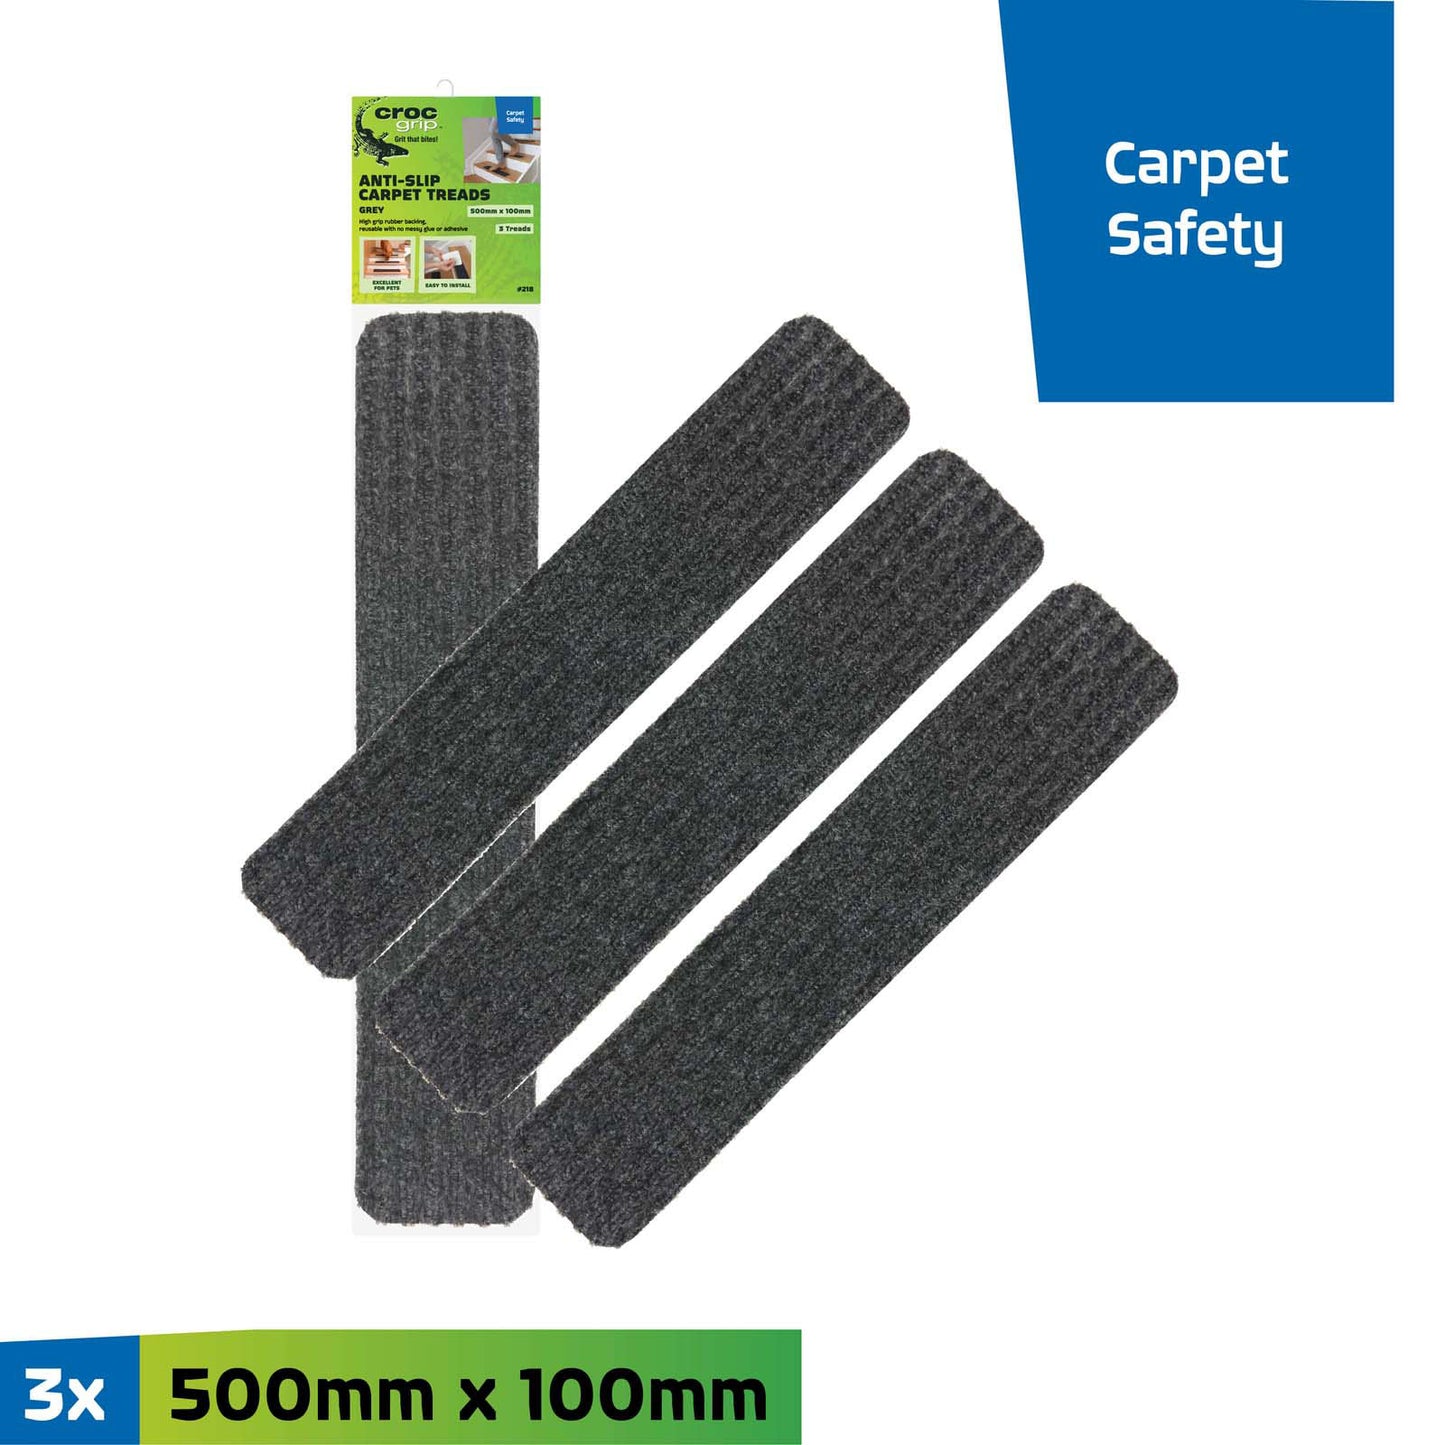 Anti-Slip Carpet Treads - 3 Pack